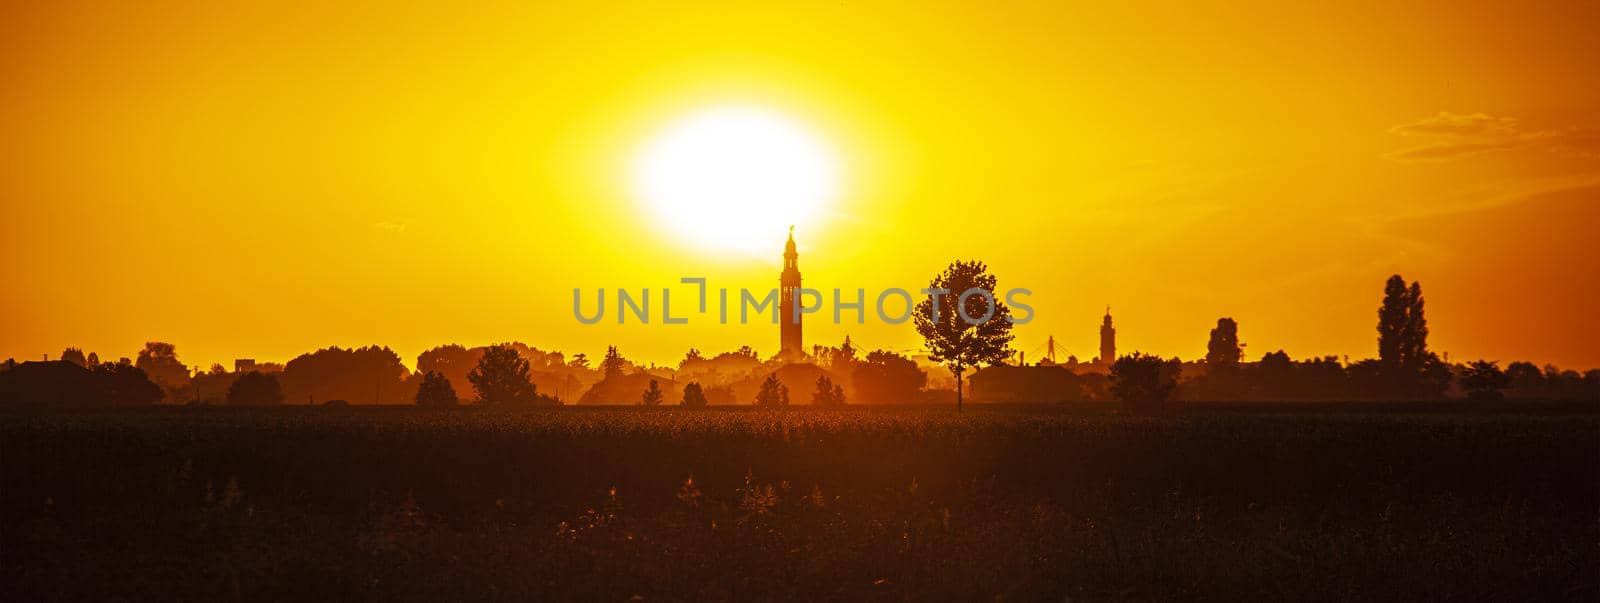 Countryside landscape sunset orange 2 by pippocarlot